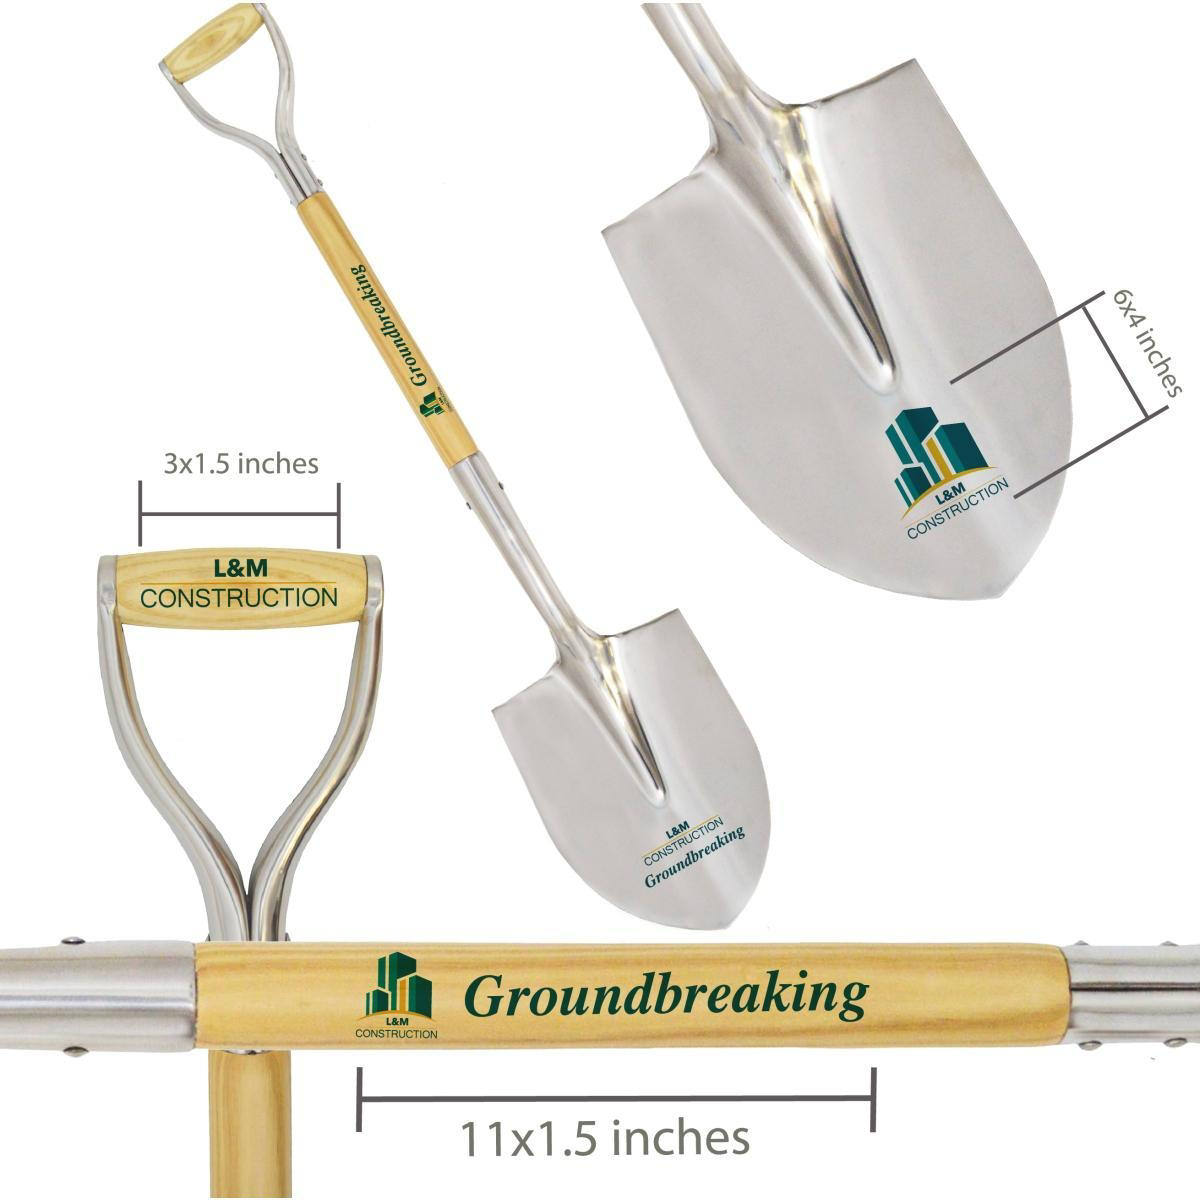 groundbreaking shovel printing options